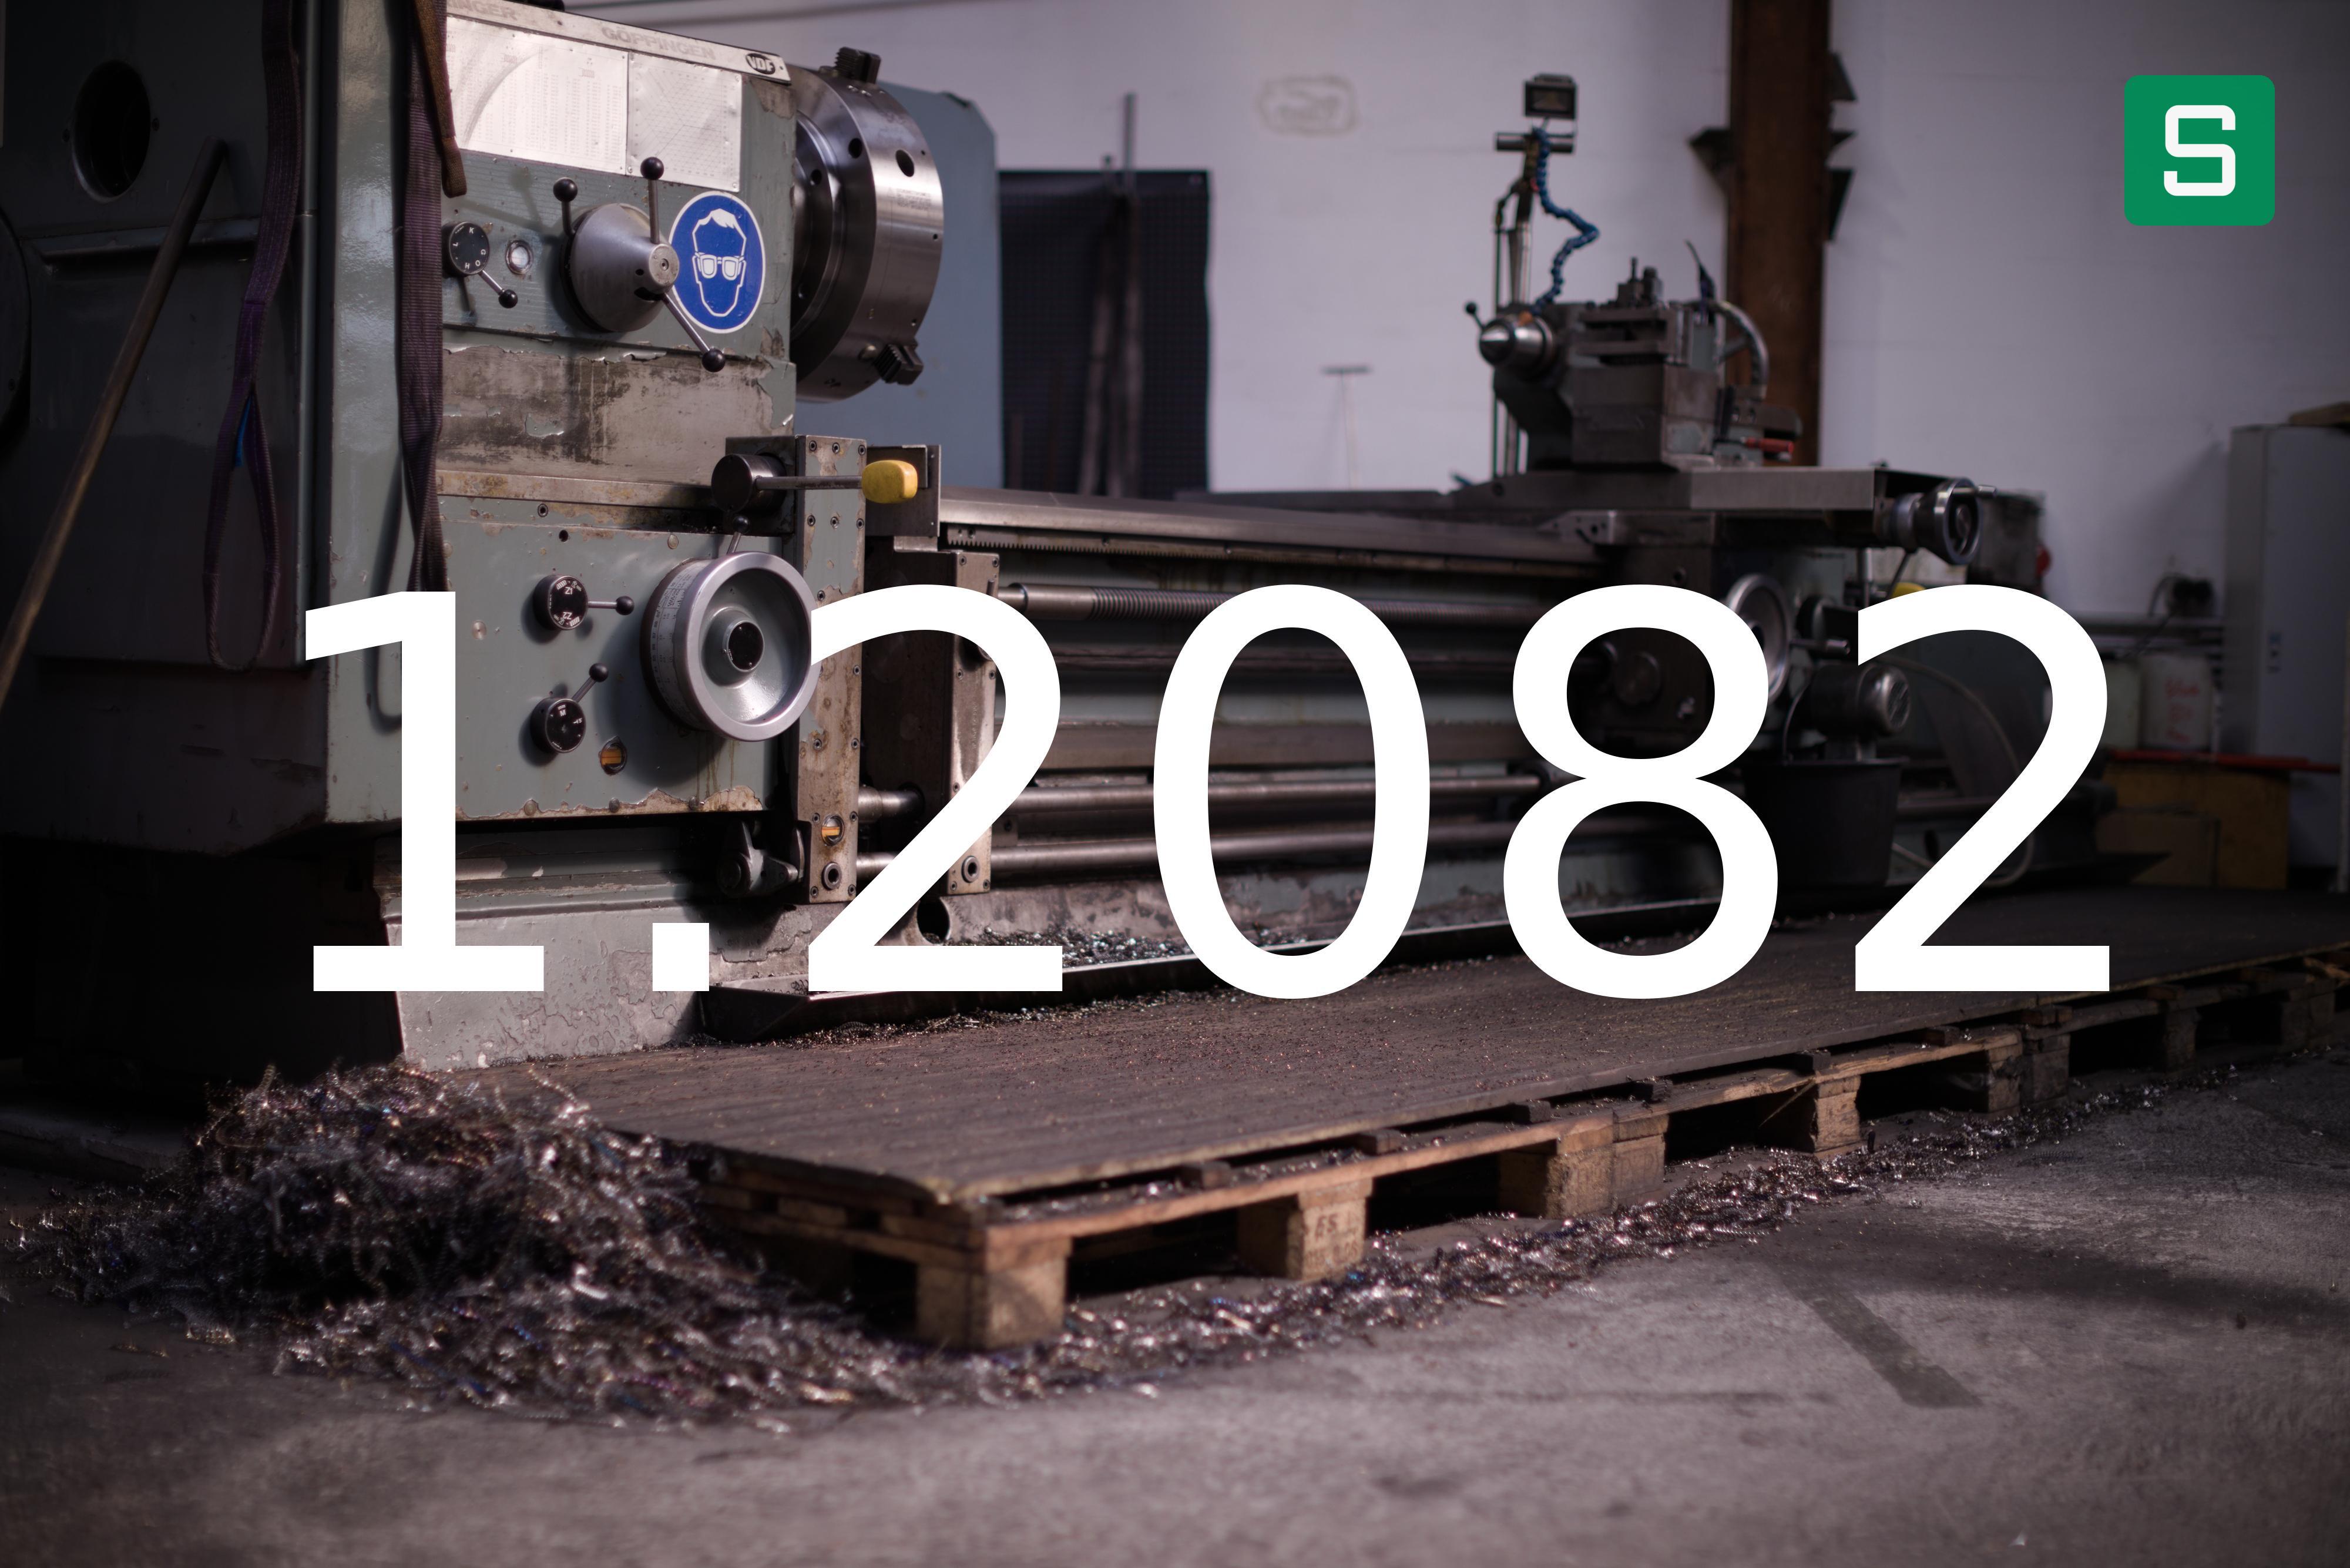 Steel Material: 1.2082